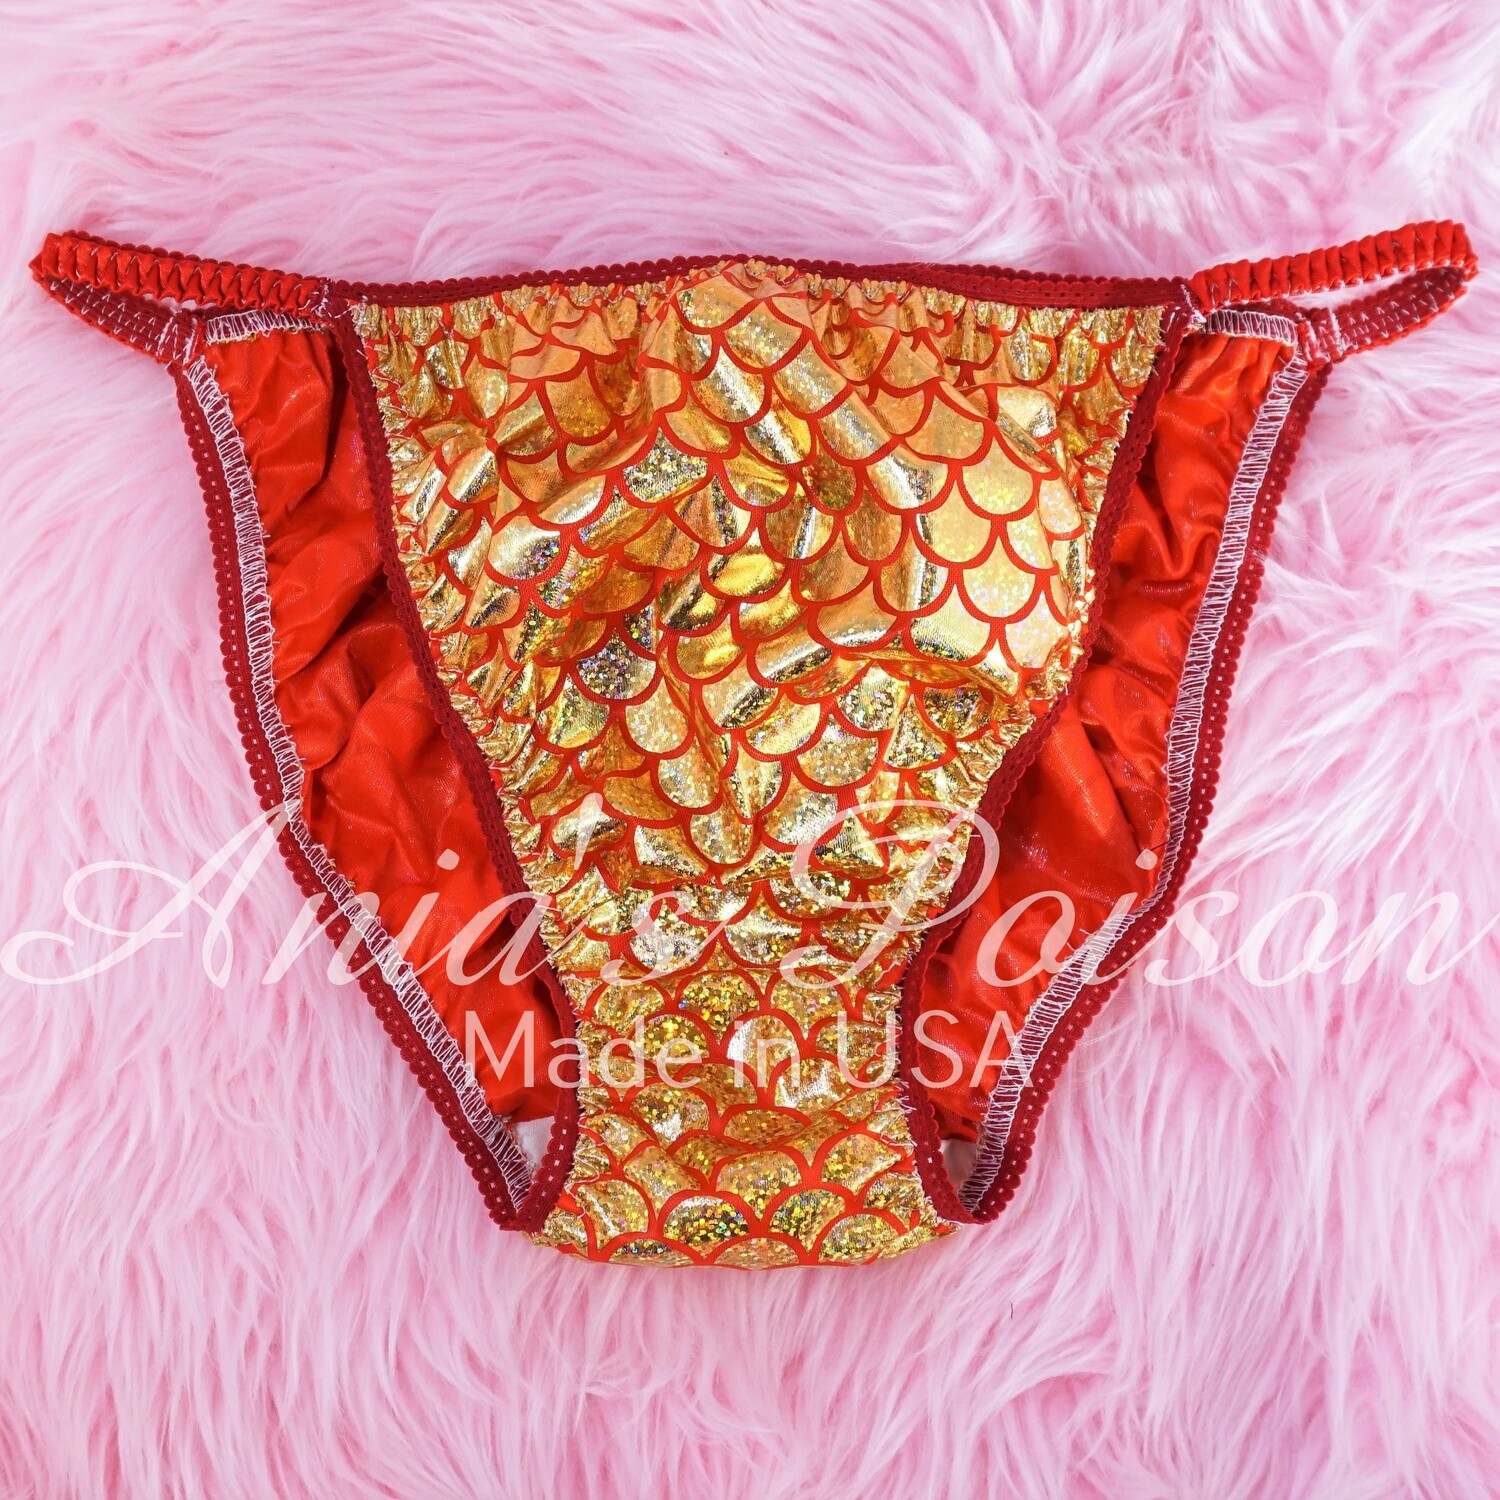 Lace Duchess Classic 80's Gold Red FOIL Metallic Shiny satin panties - String bikini- new mens and womens cuts! Matching Couples